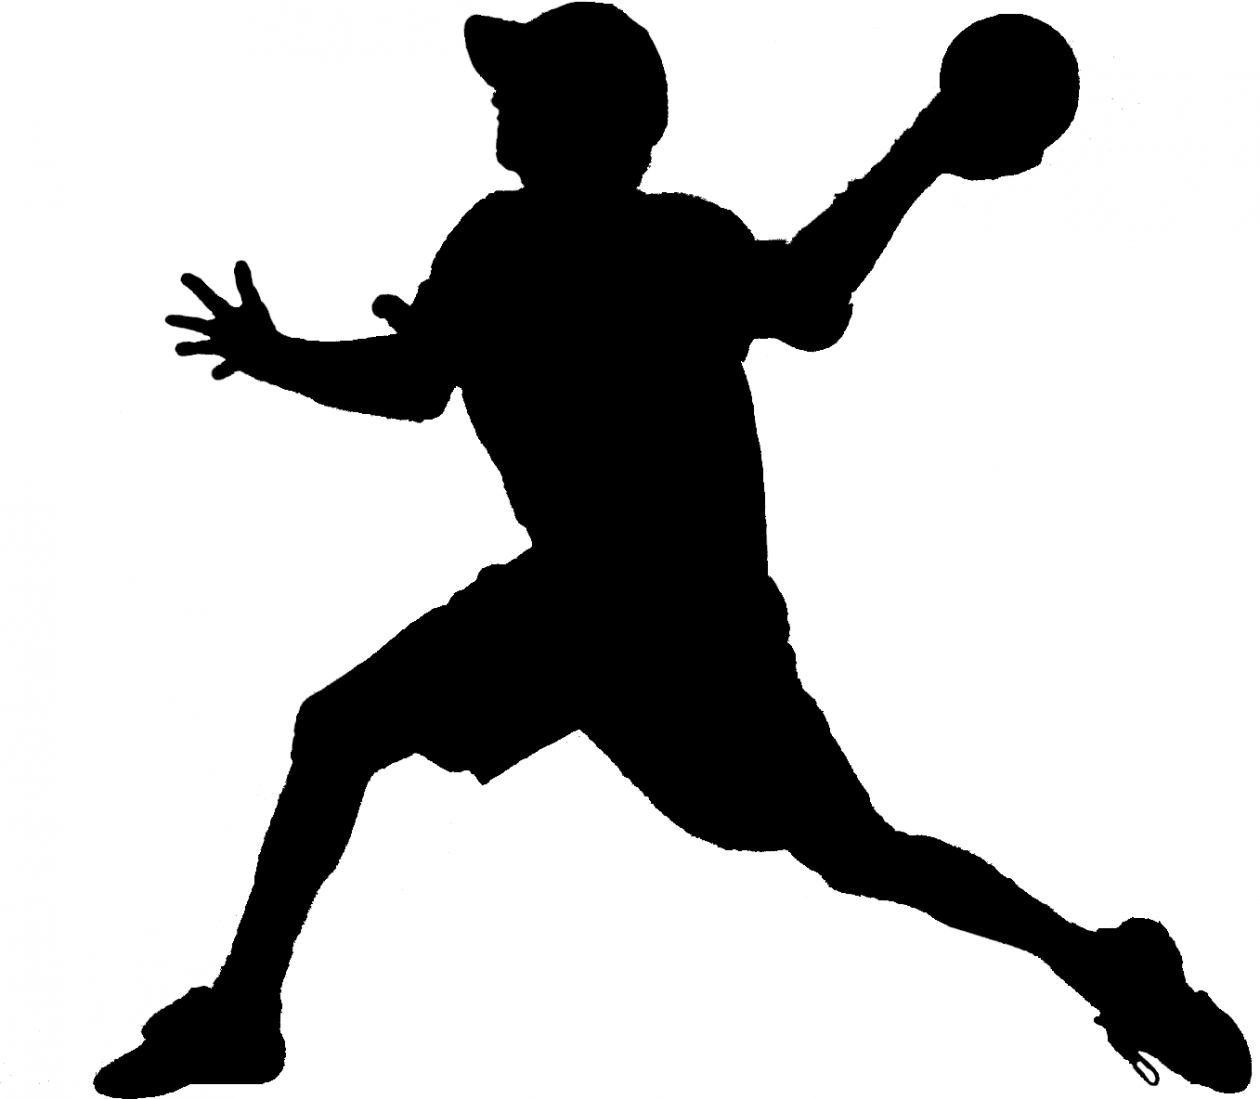 Dodgeball clipart dodgeball player. Free download best on